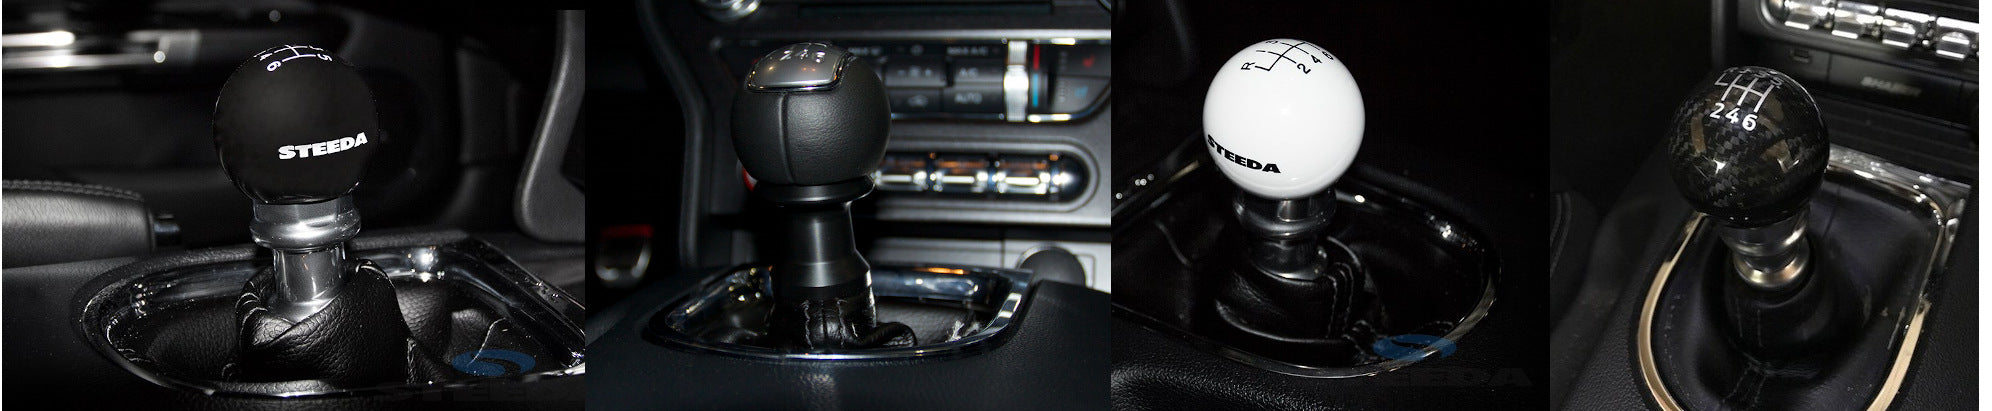 Steeda Ford MUstang Interior shifter upgrades, knobs and shifter collars